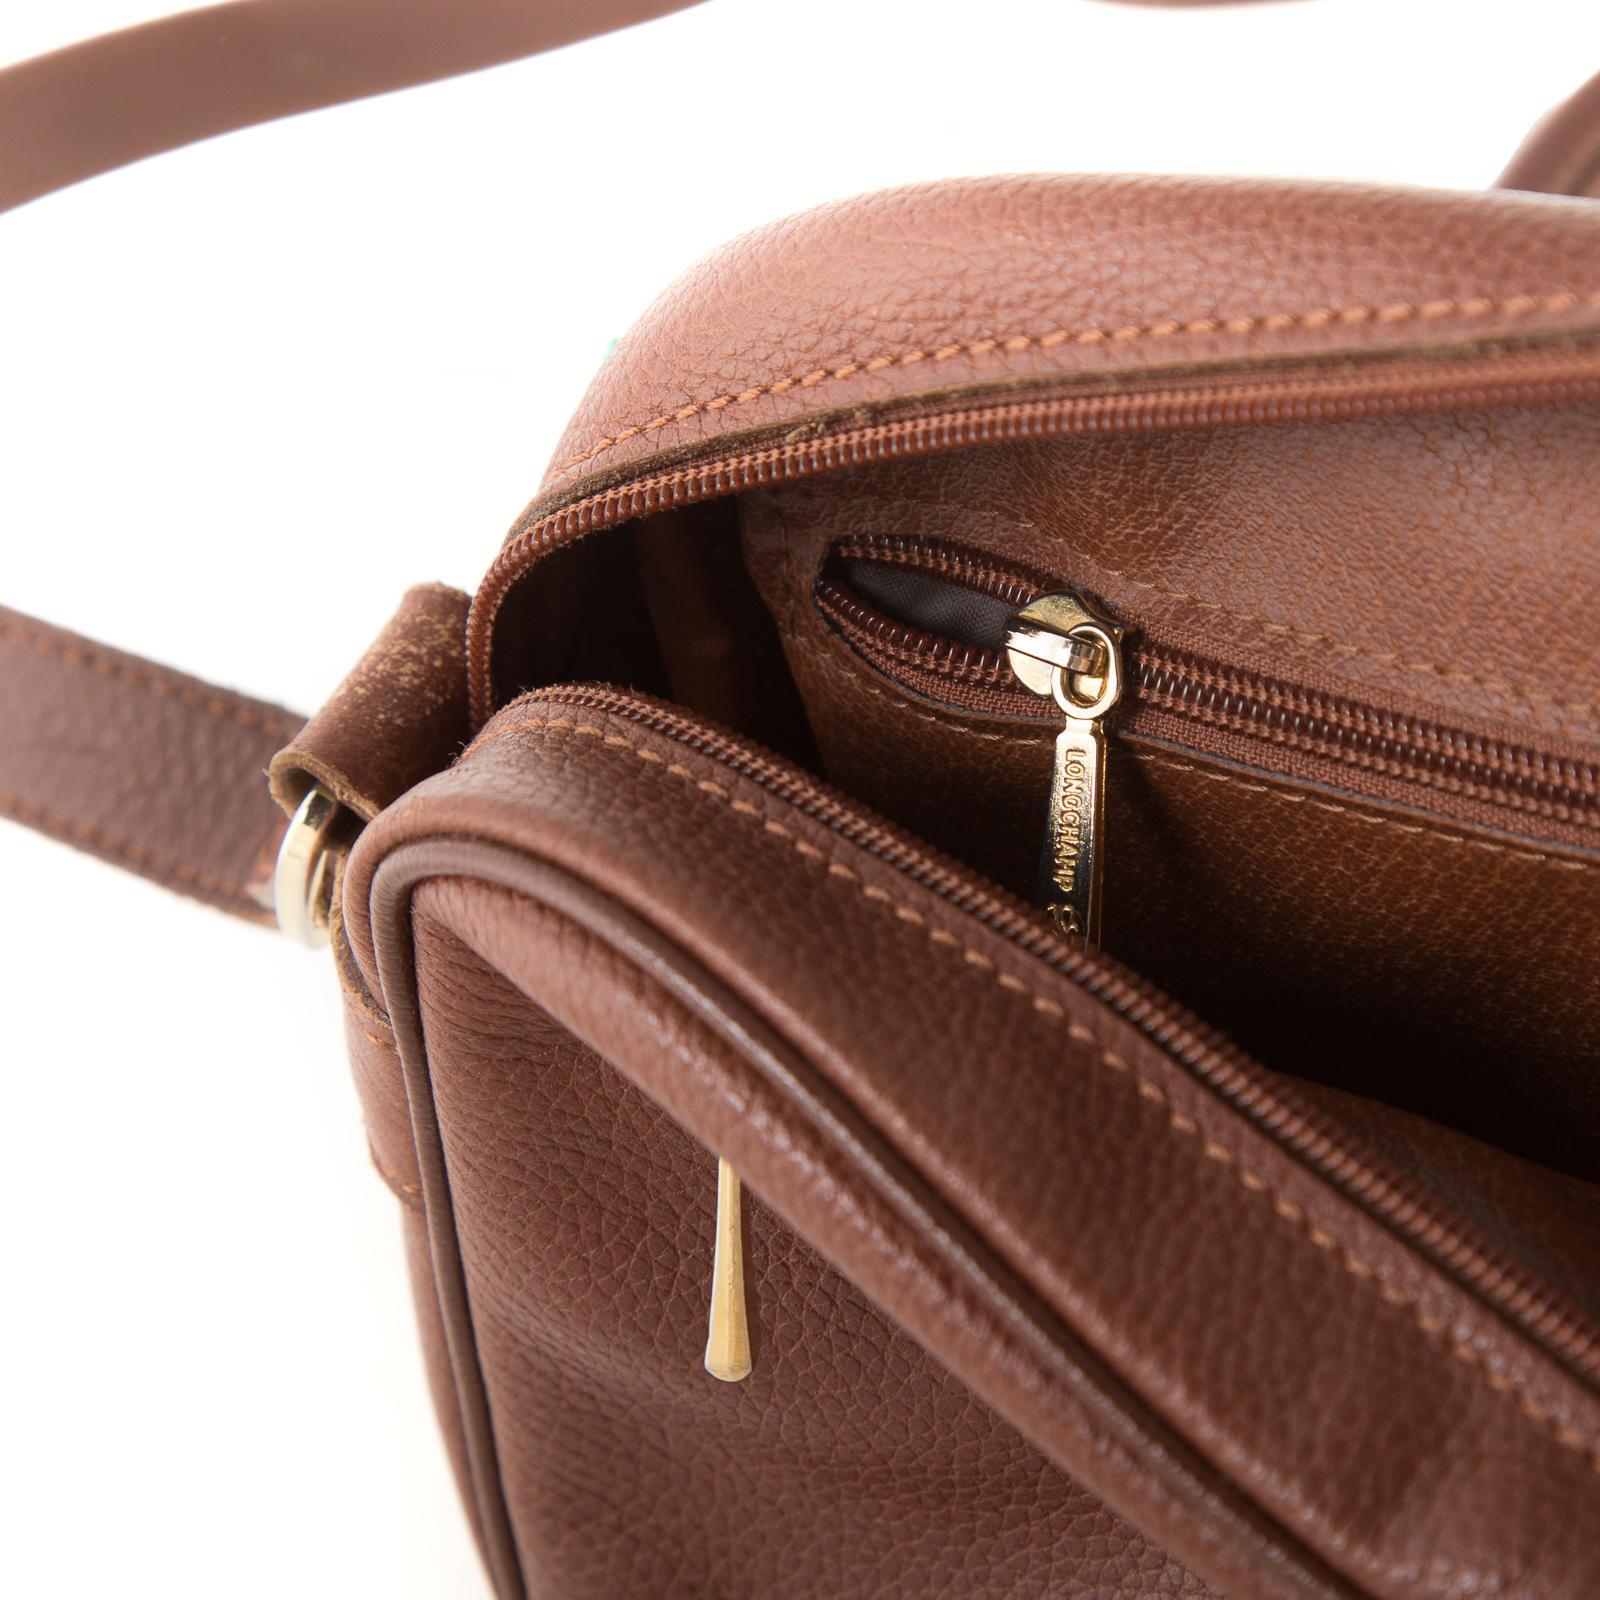 A Vintage Longchamp Leather Crossbody Bag